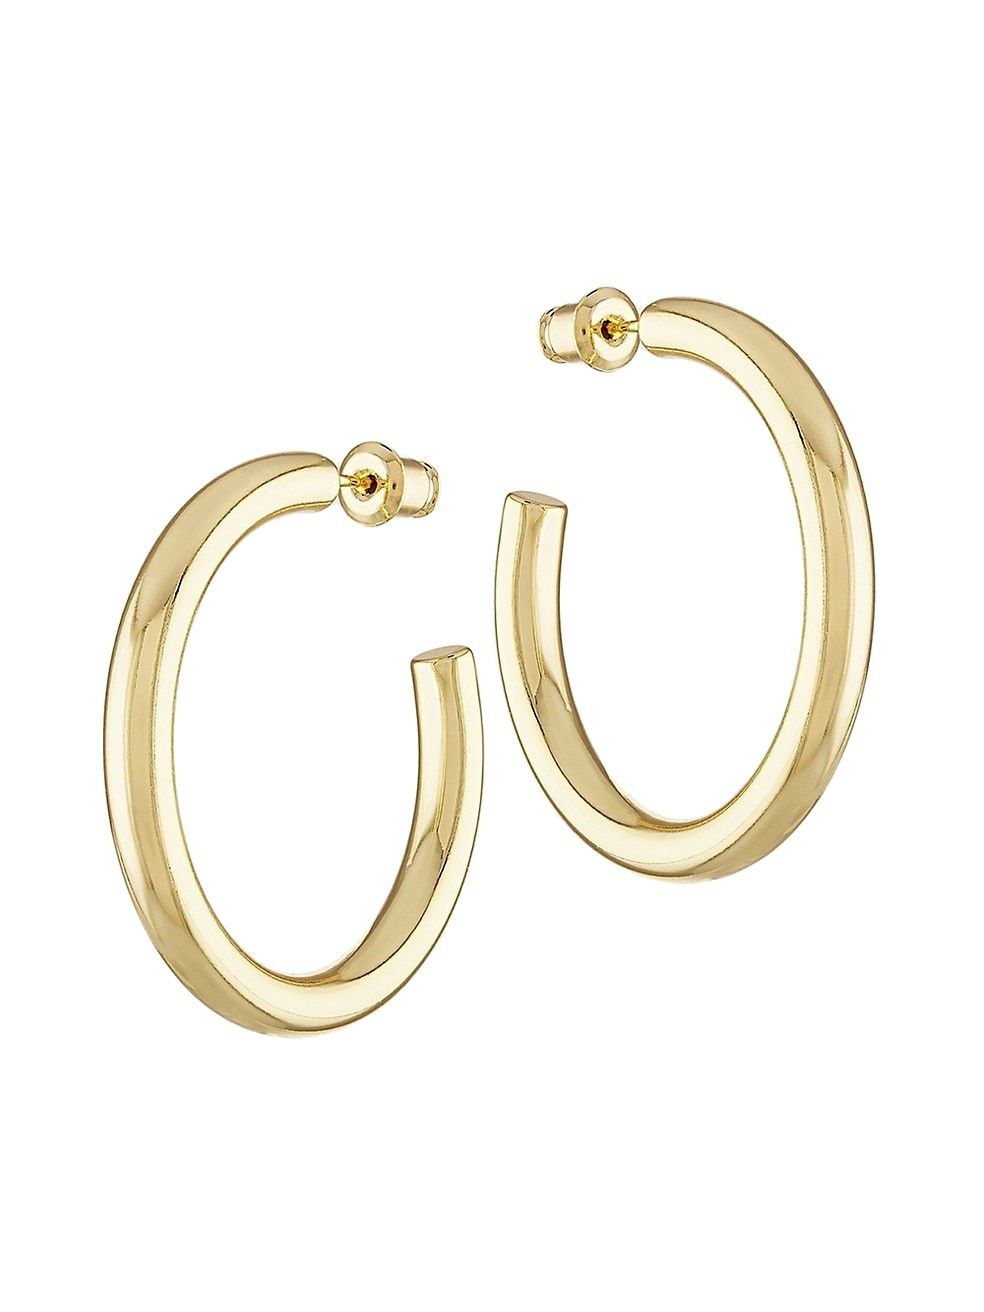 Everynight 14K Gold-Filled Hoop Earrings | Saks Fifth Avenue